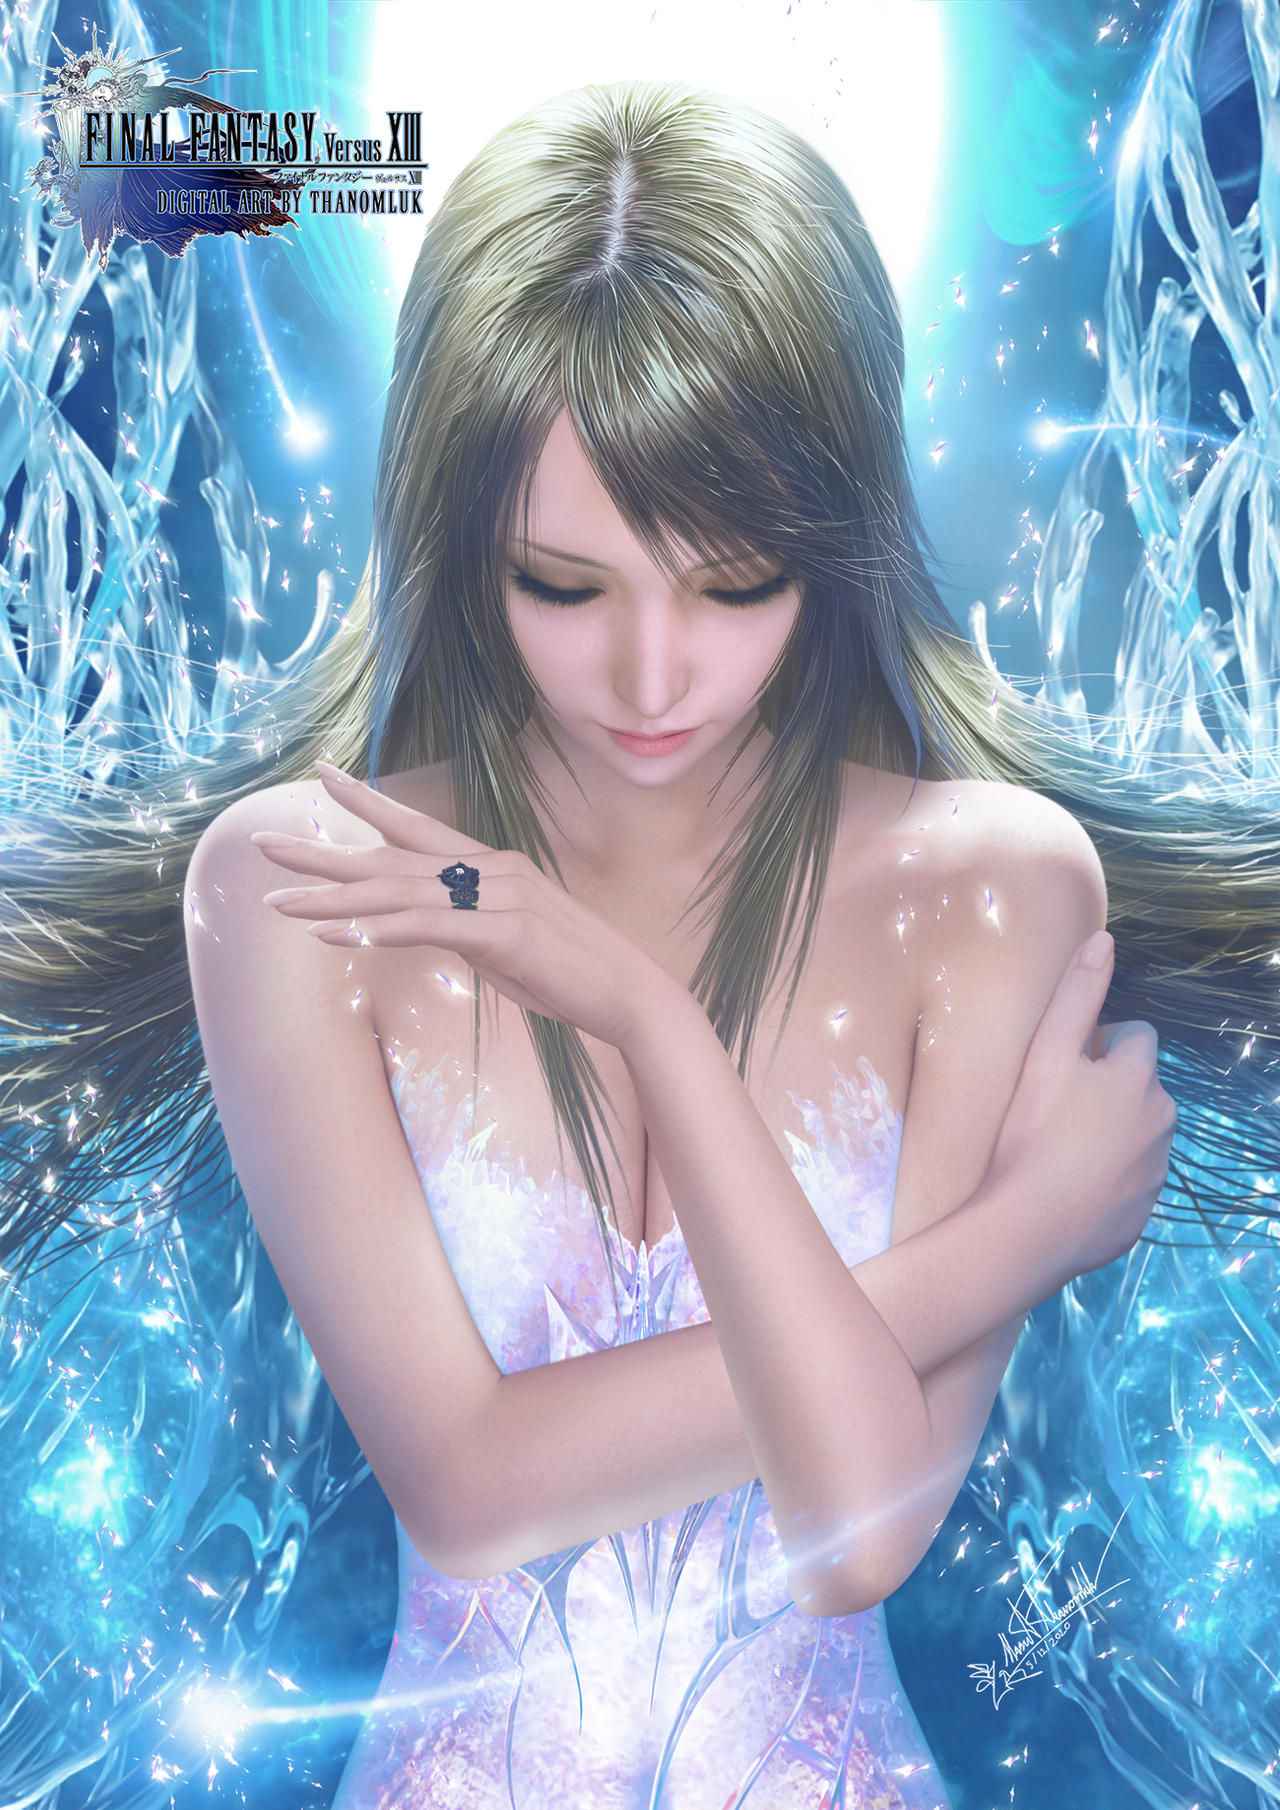 ArtStation - lightning returns final fantasy xiii by thanomluk